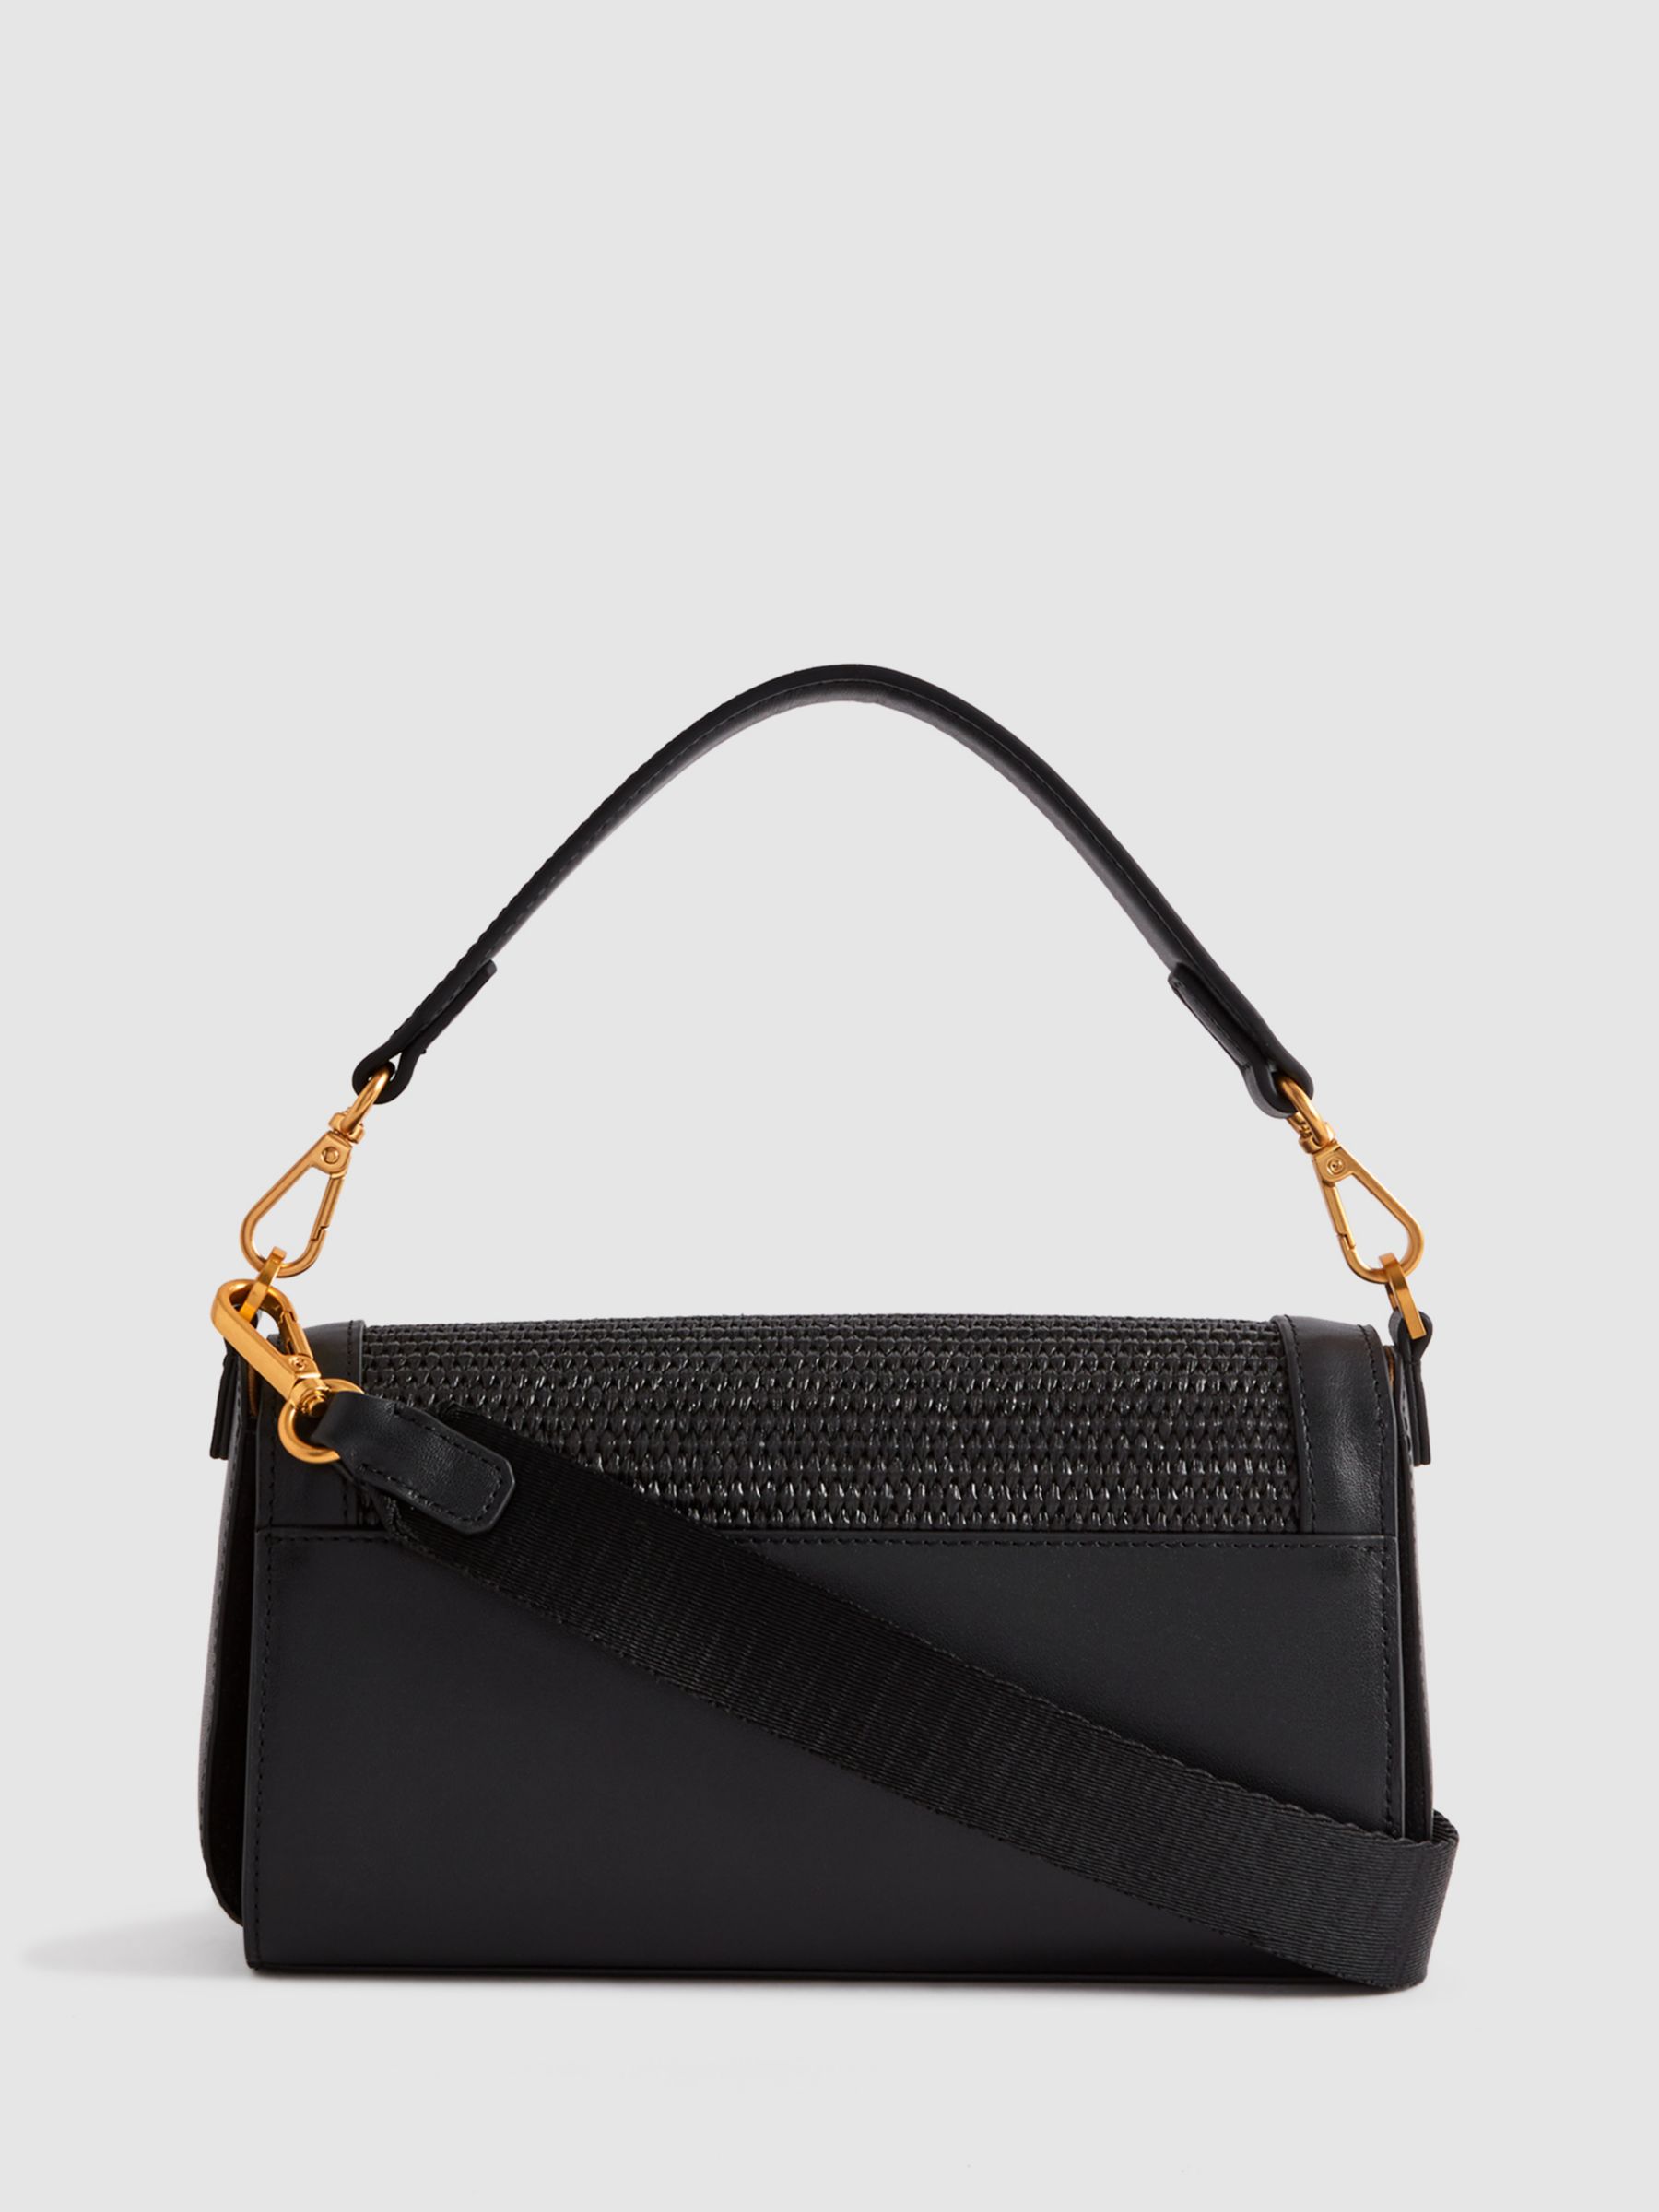 Reiss Ivy Leather & Raffia Baguette Bag, Black, One Size